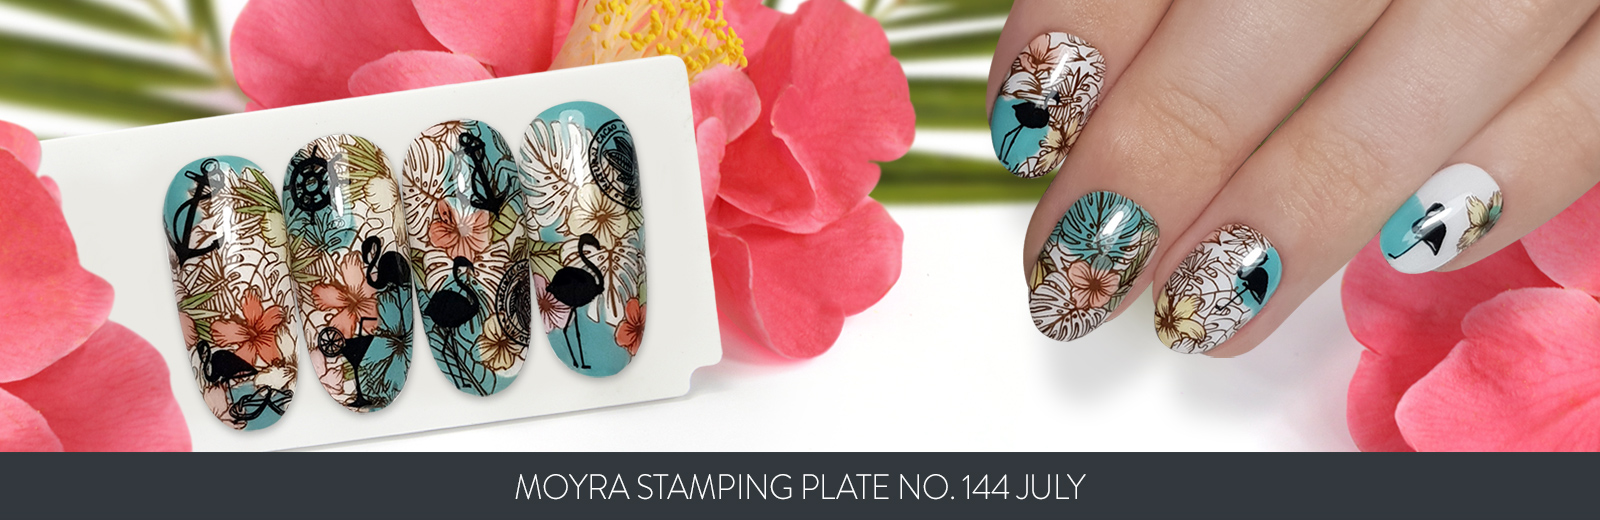 Moyra Stamping plate 144 July